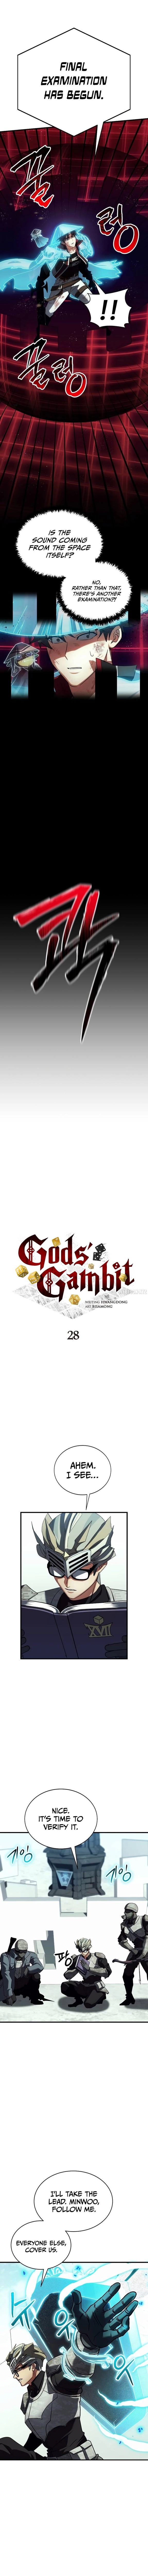 gods-gambit-chap-28-6